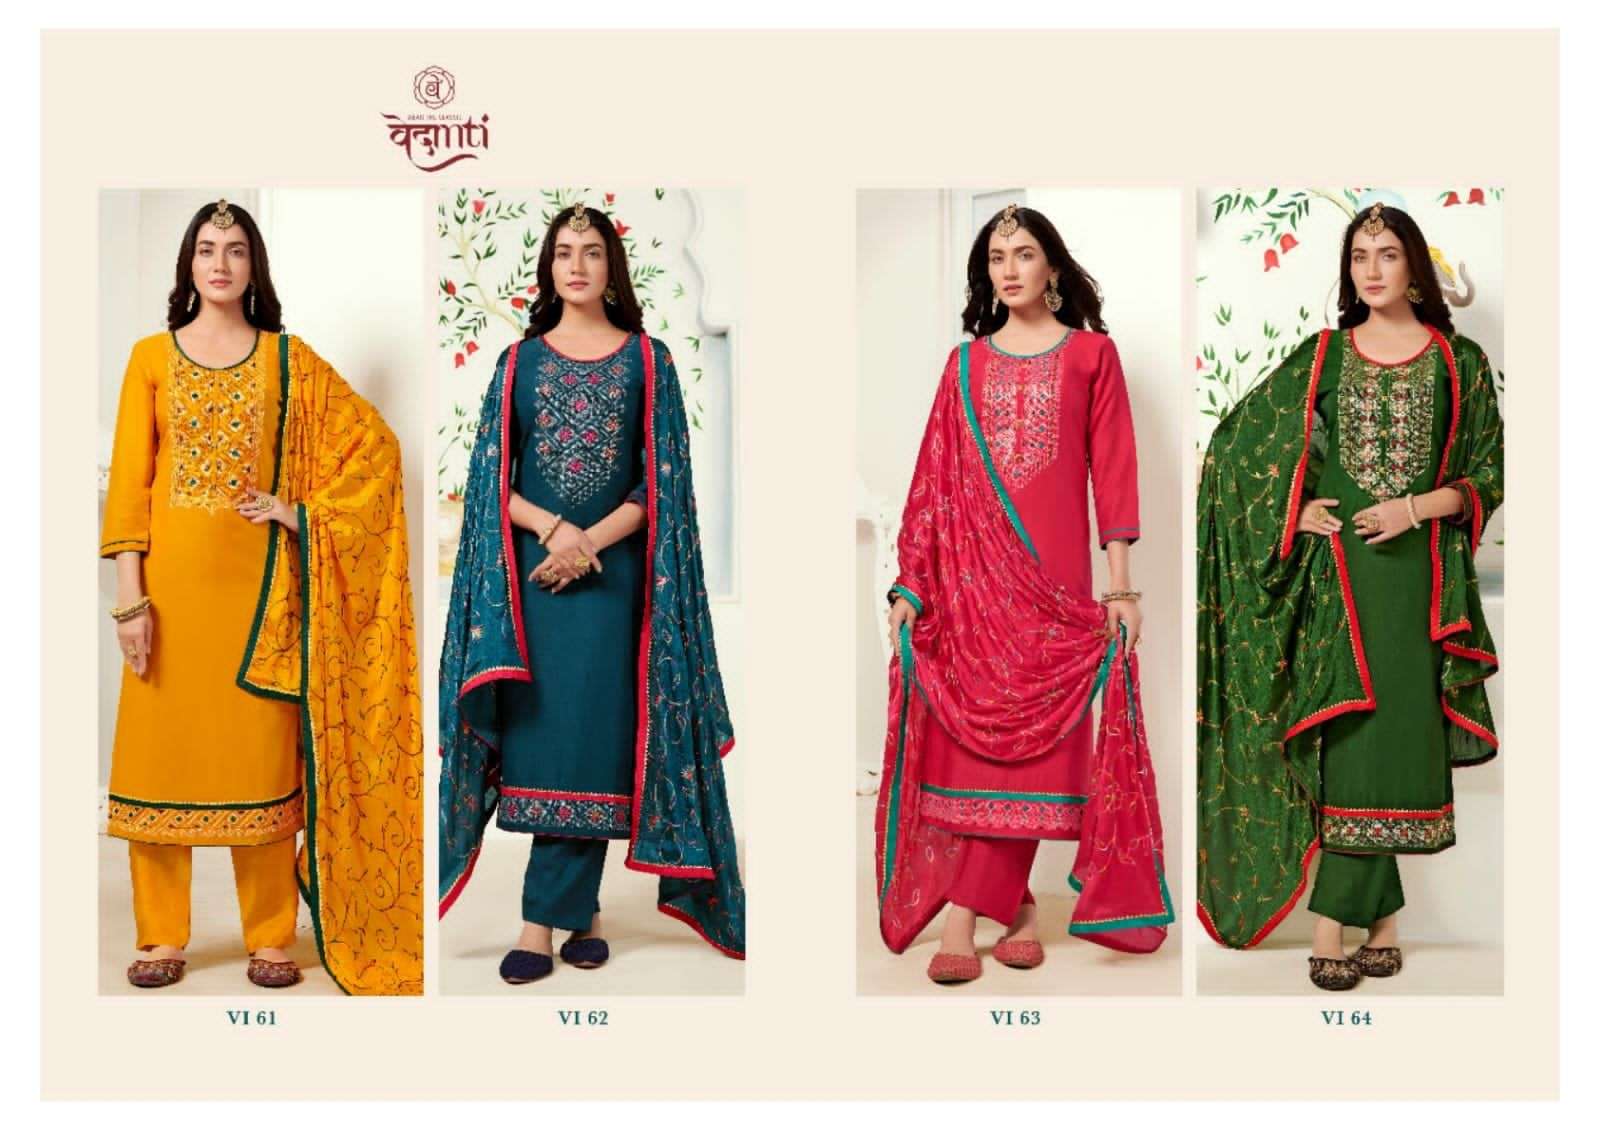 vedanti tanuja 61-64 series stylish designer suits catalogue online supplier surat